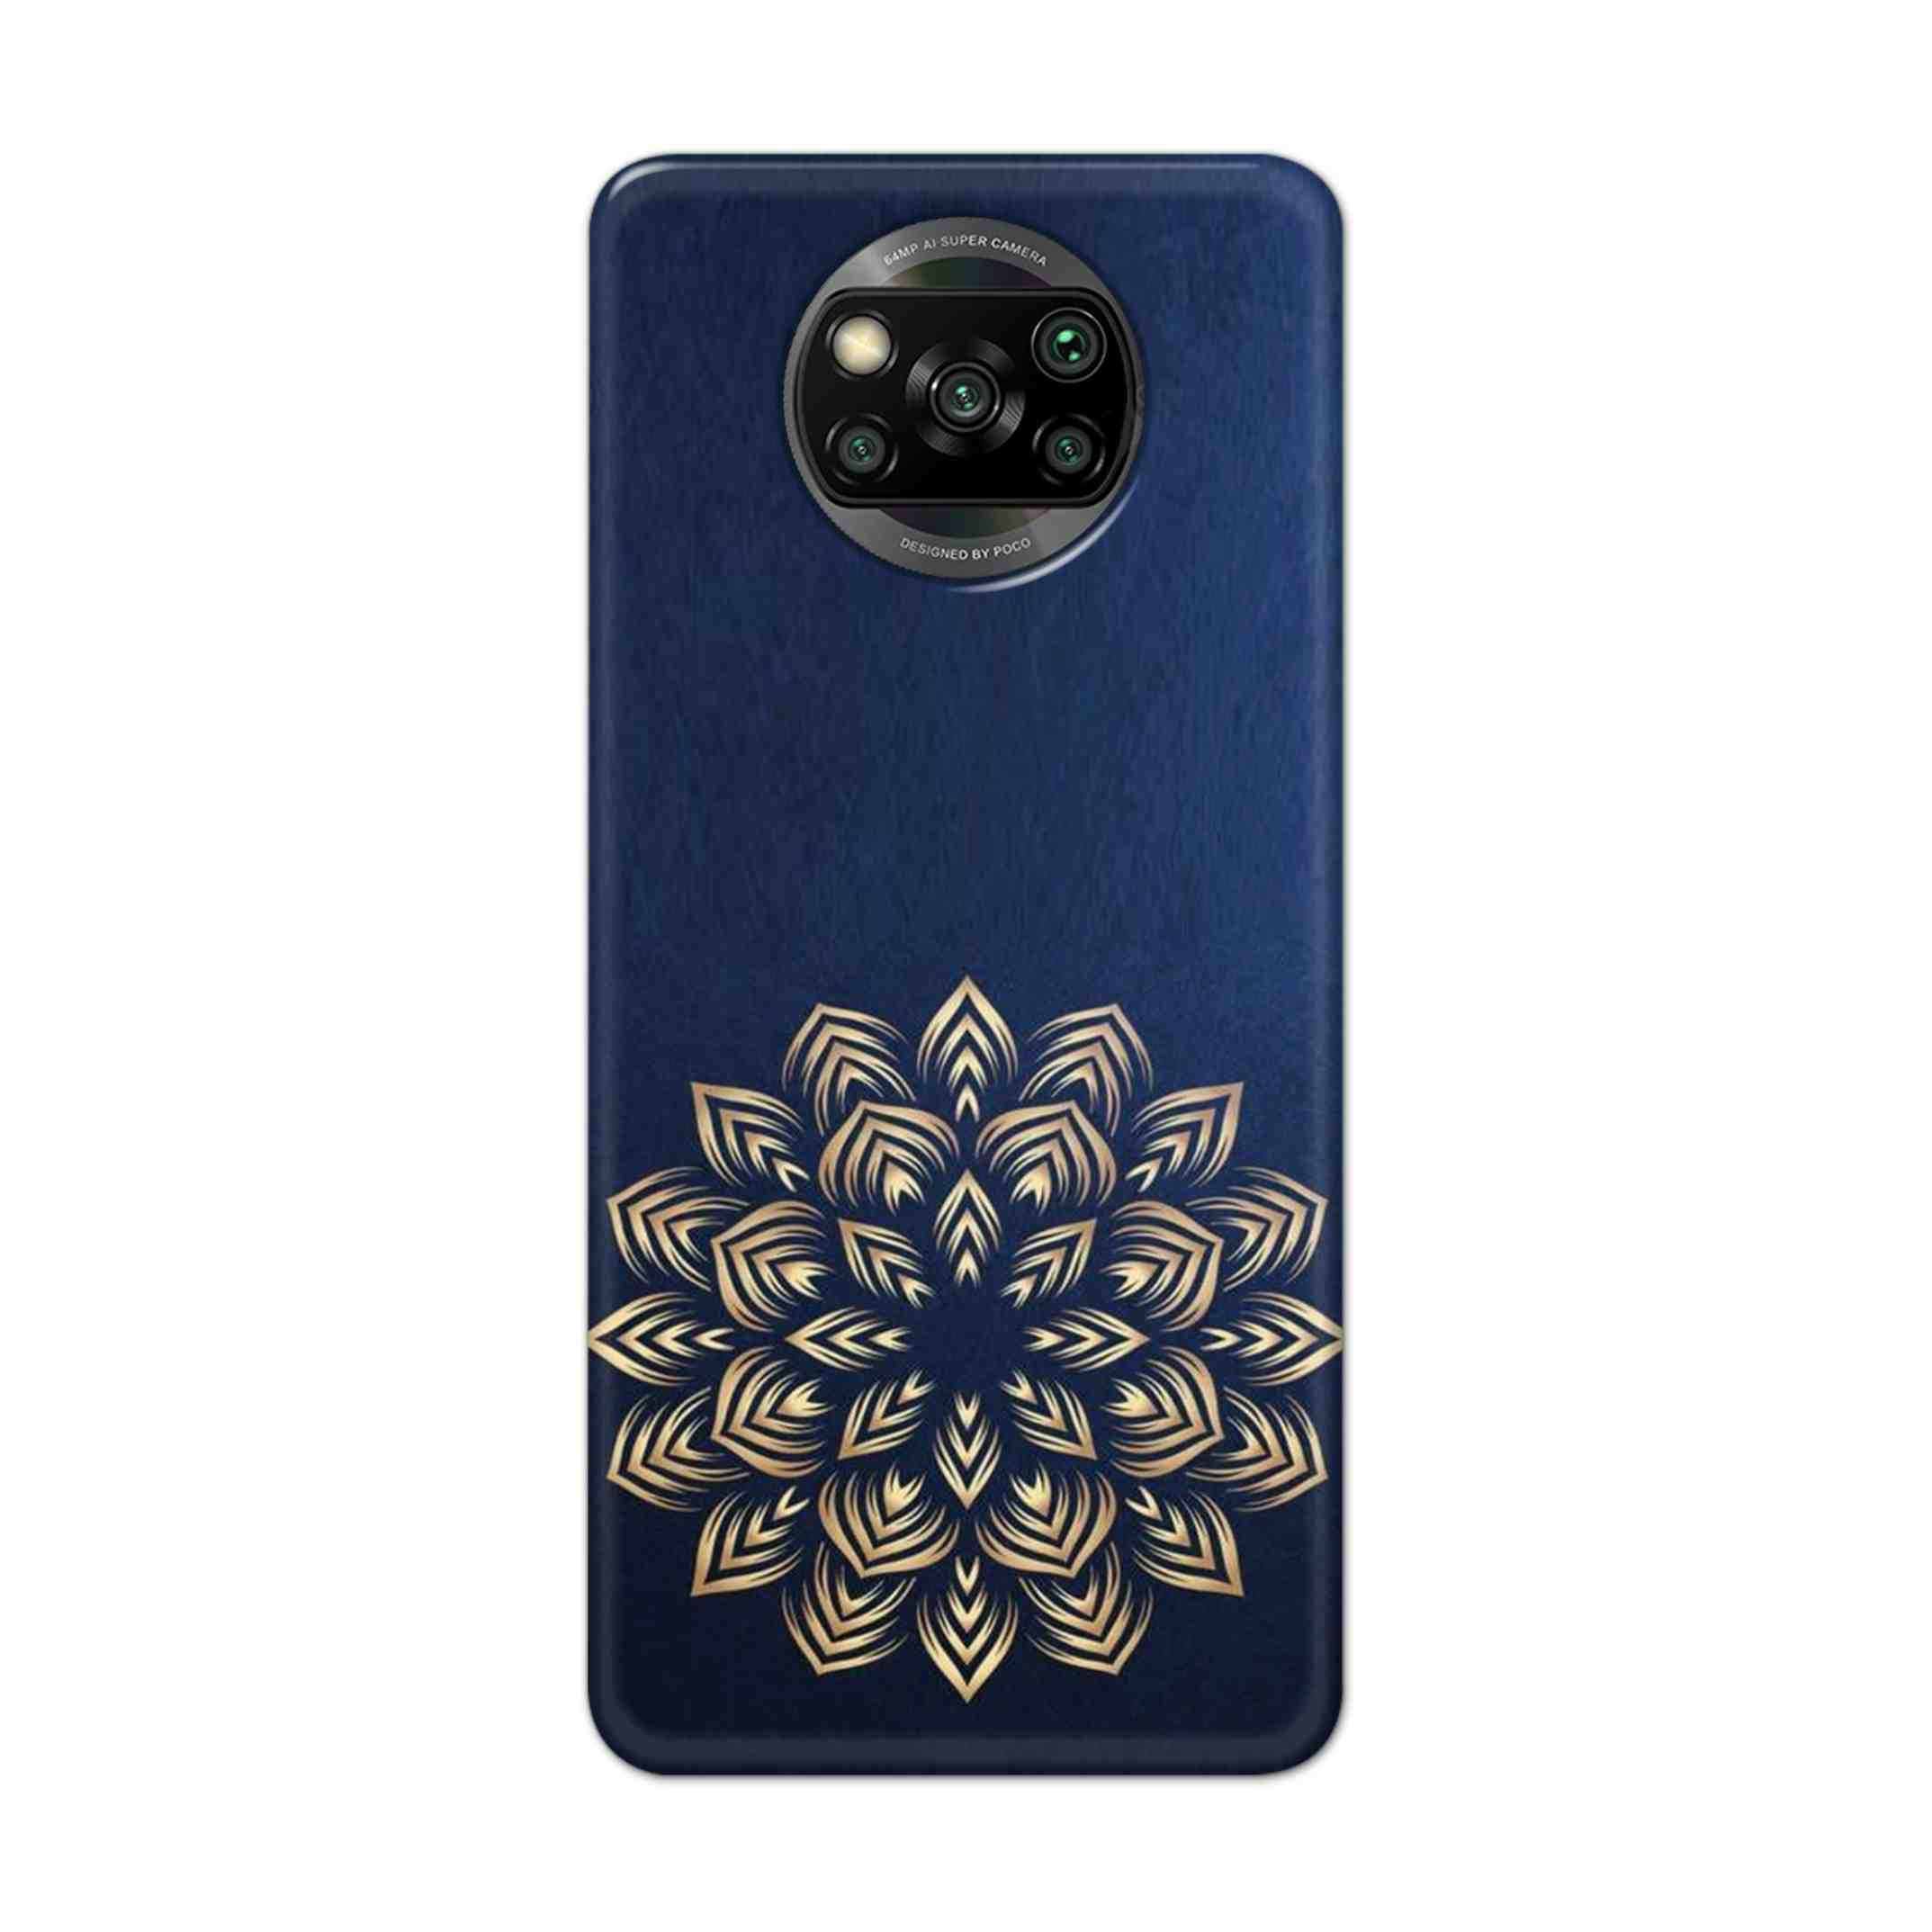 Buy Heart Mandala Hard Back Mobile Phone Case Cover For Pcoc X3 NFC Online